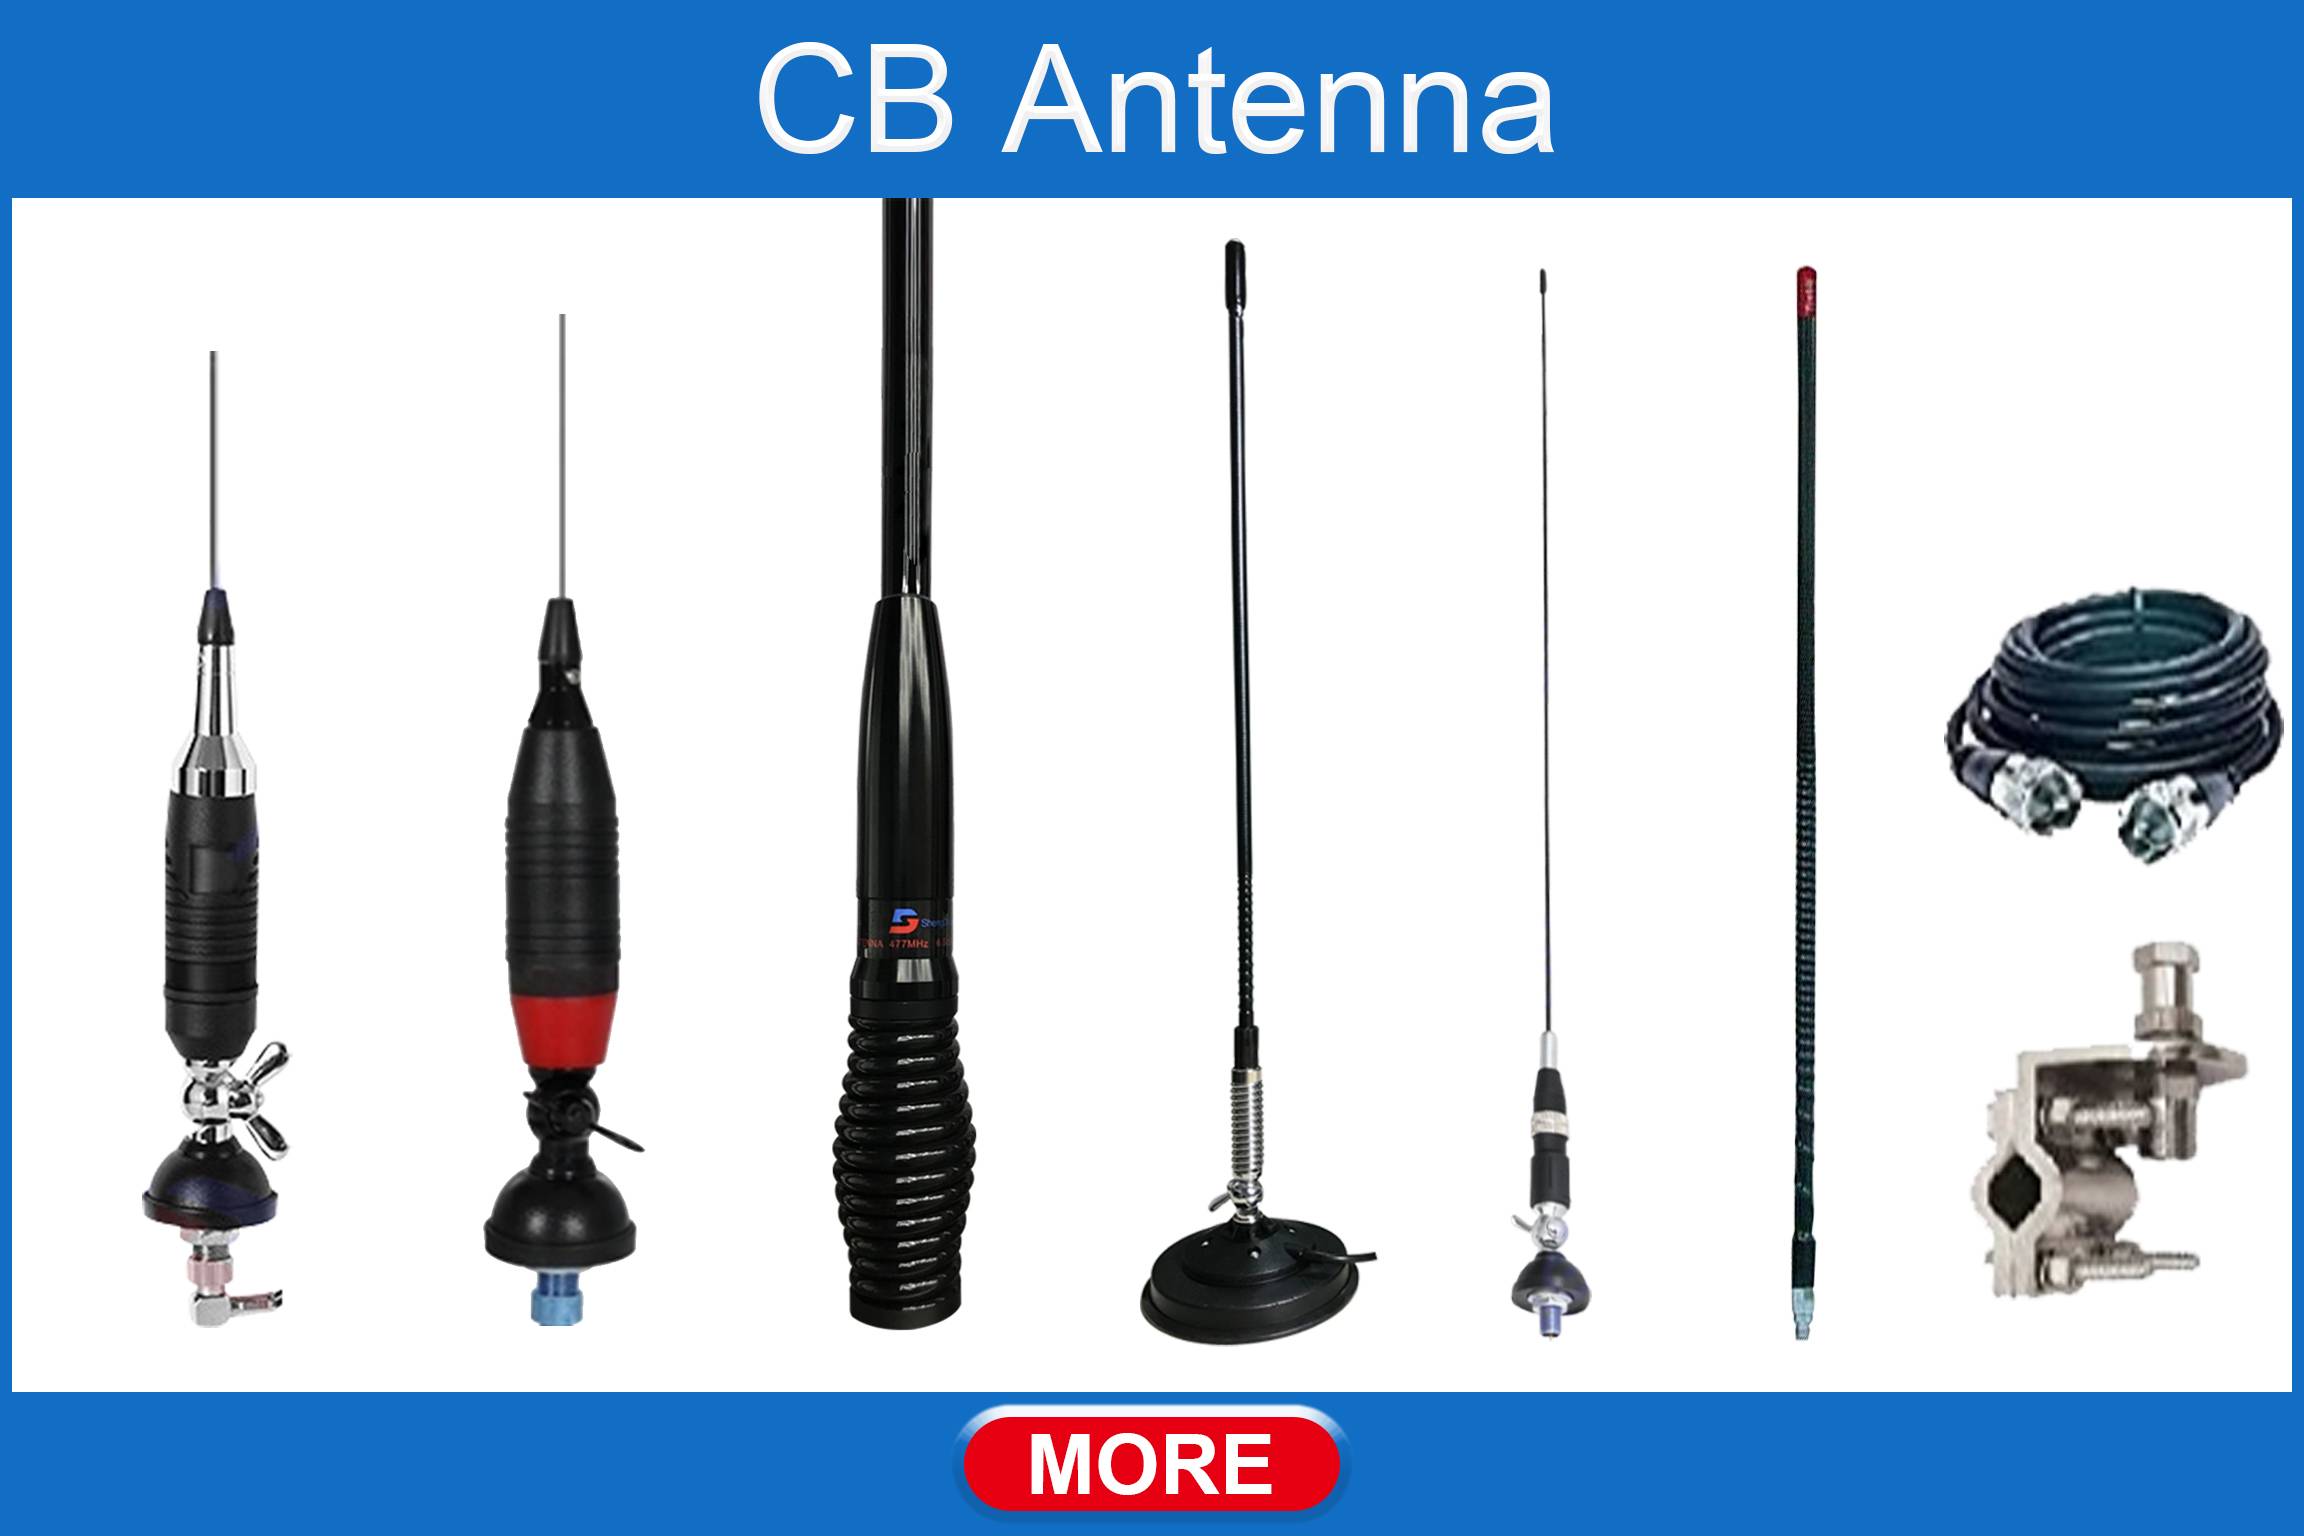 CB Antenna